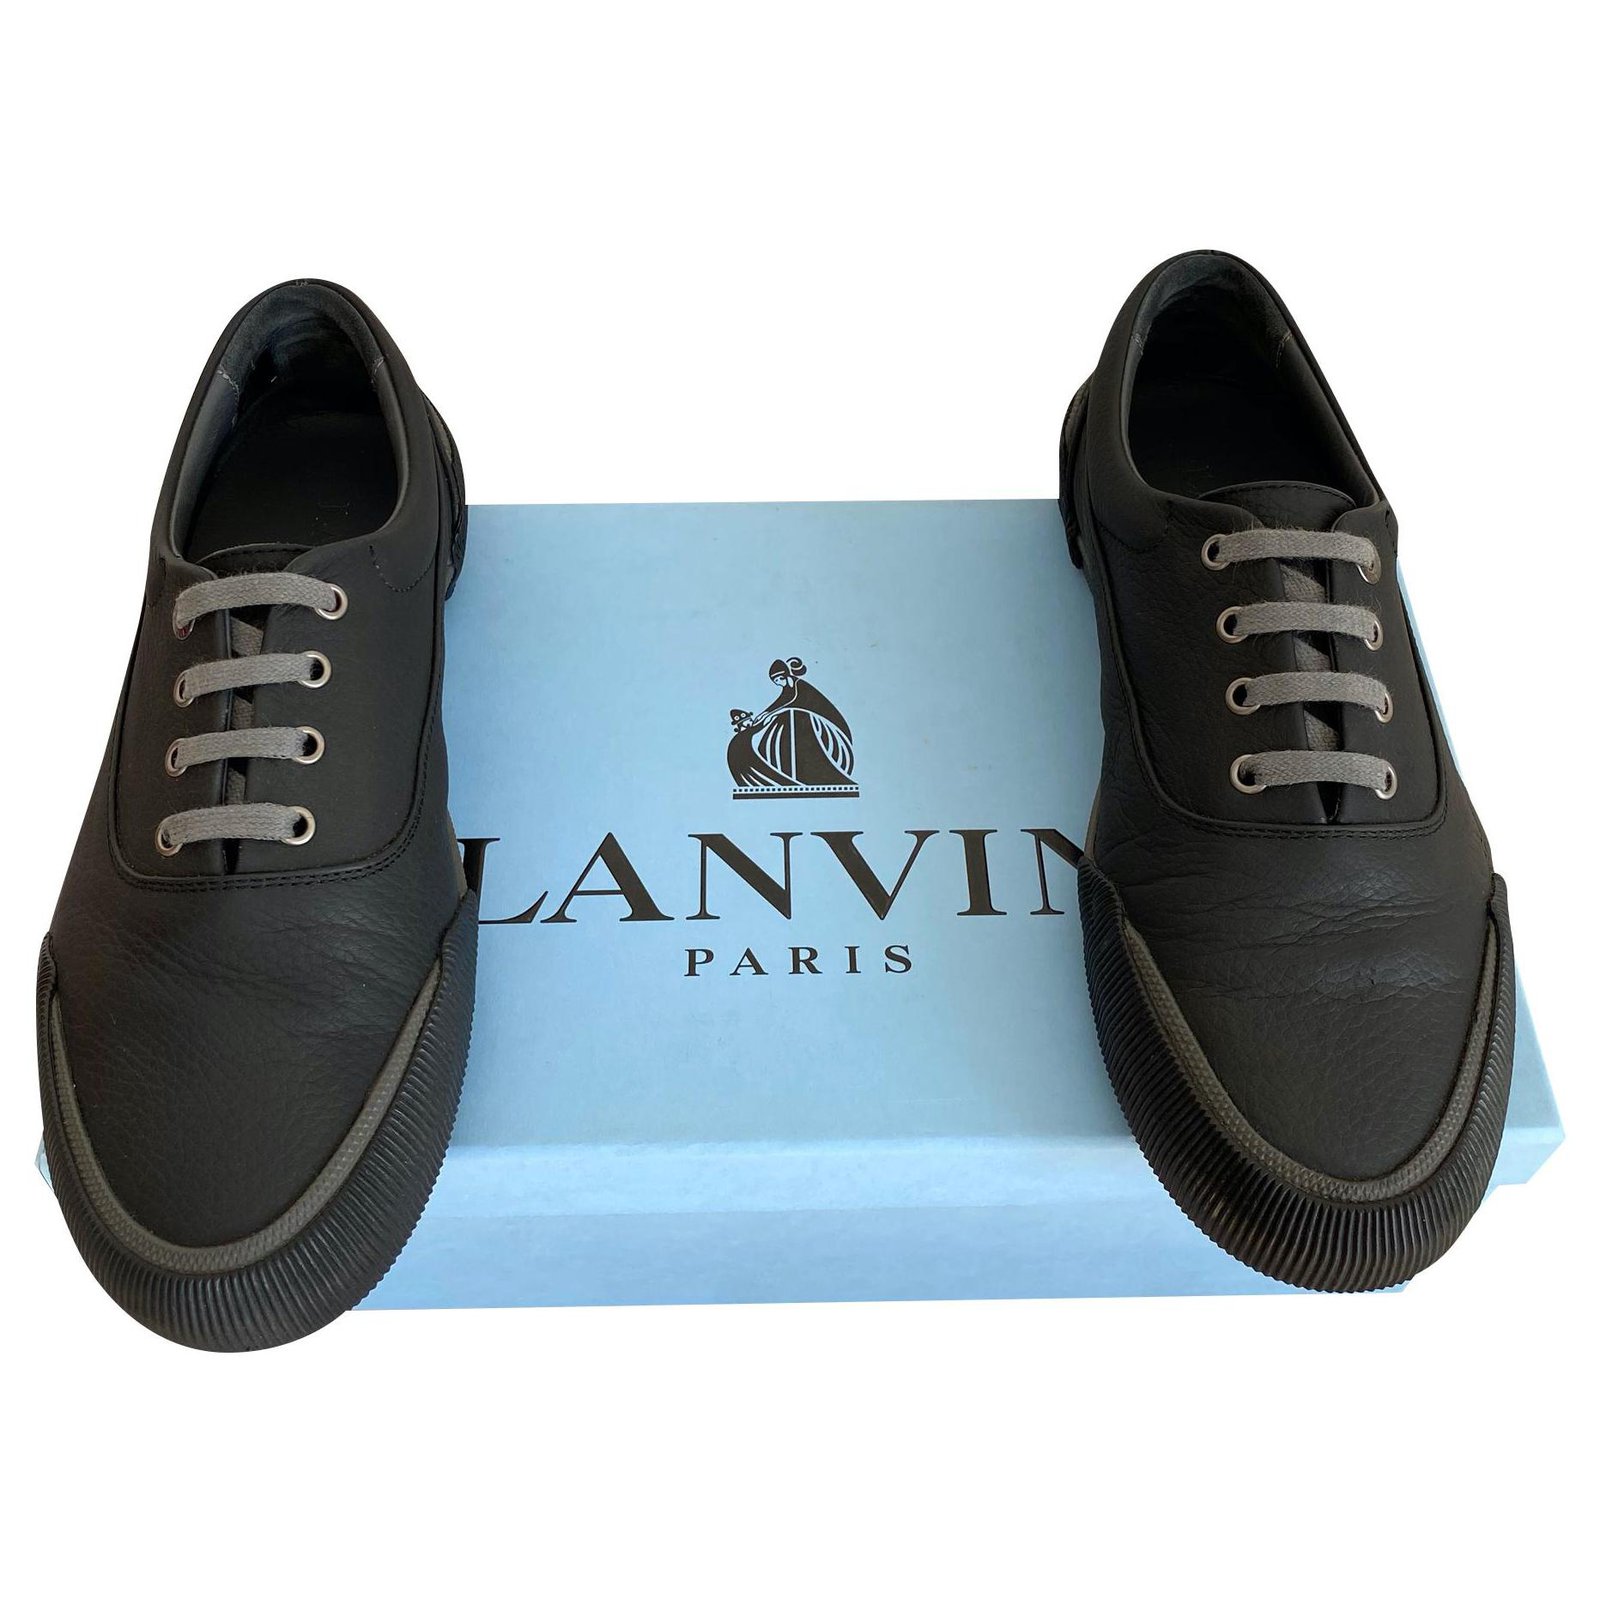 lanvin sneakers black